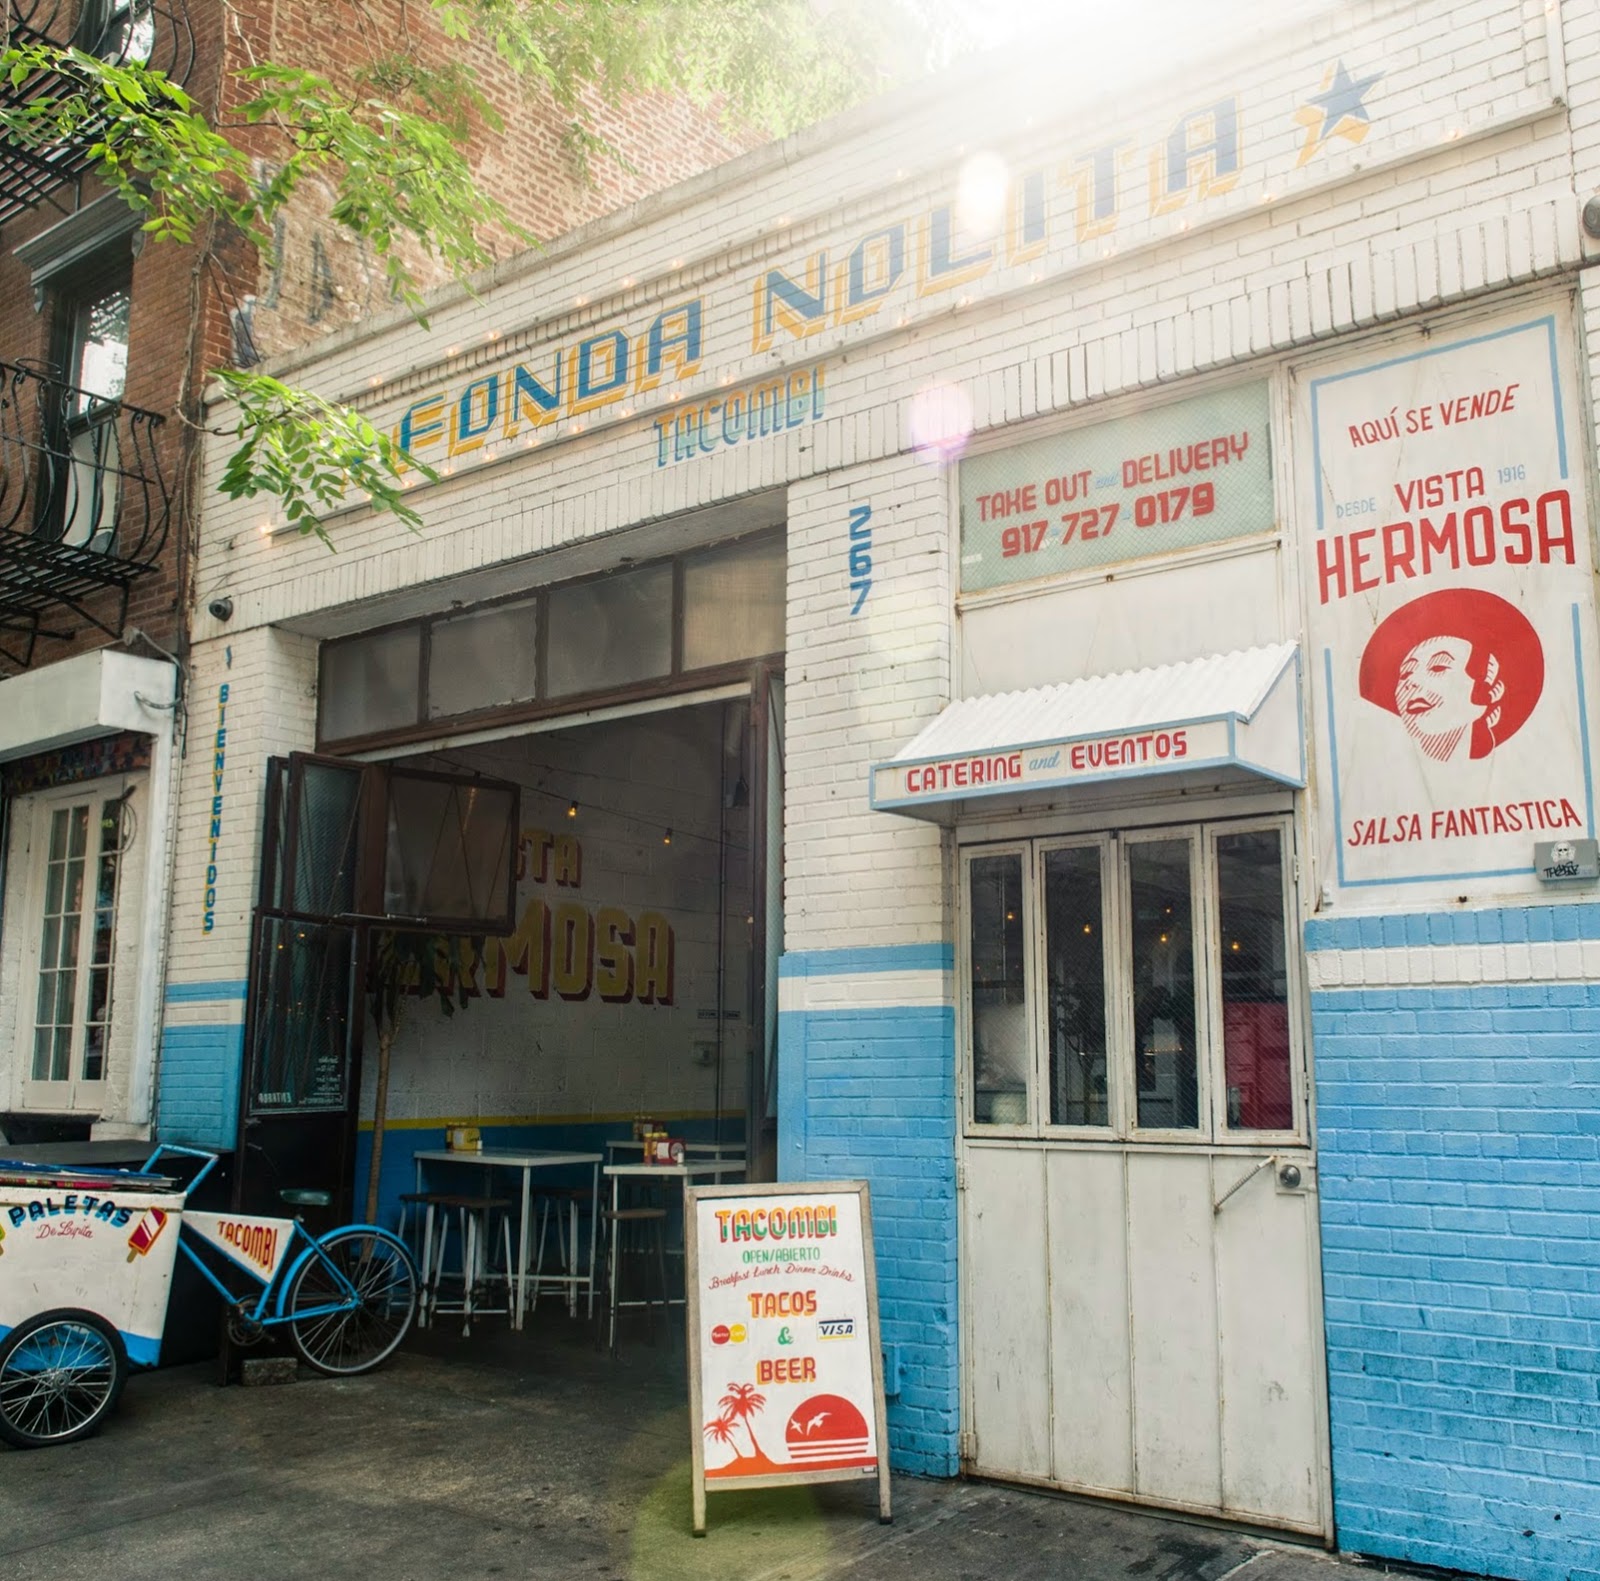 Photo of Tacombi Fonda Nolita in New York City, New York, United States - 1 Picture of Restaurant, Food, Point of interest, Establishment